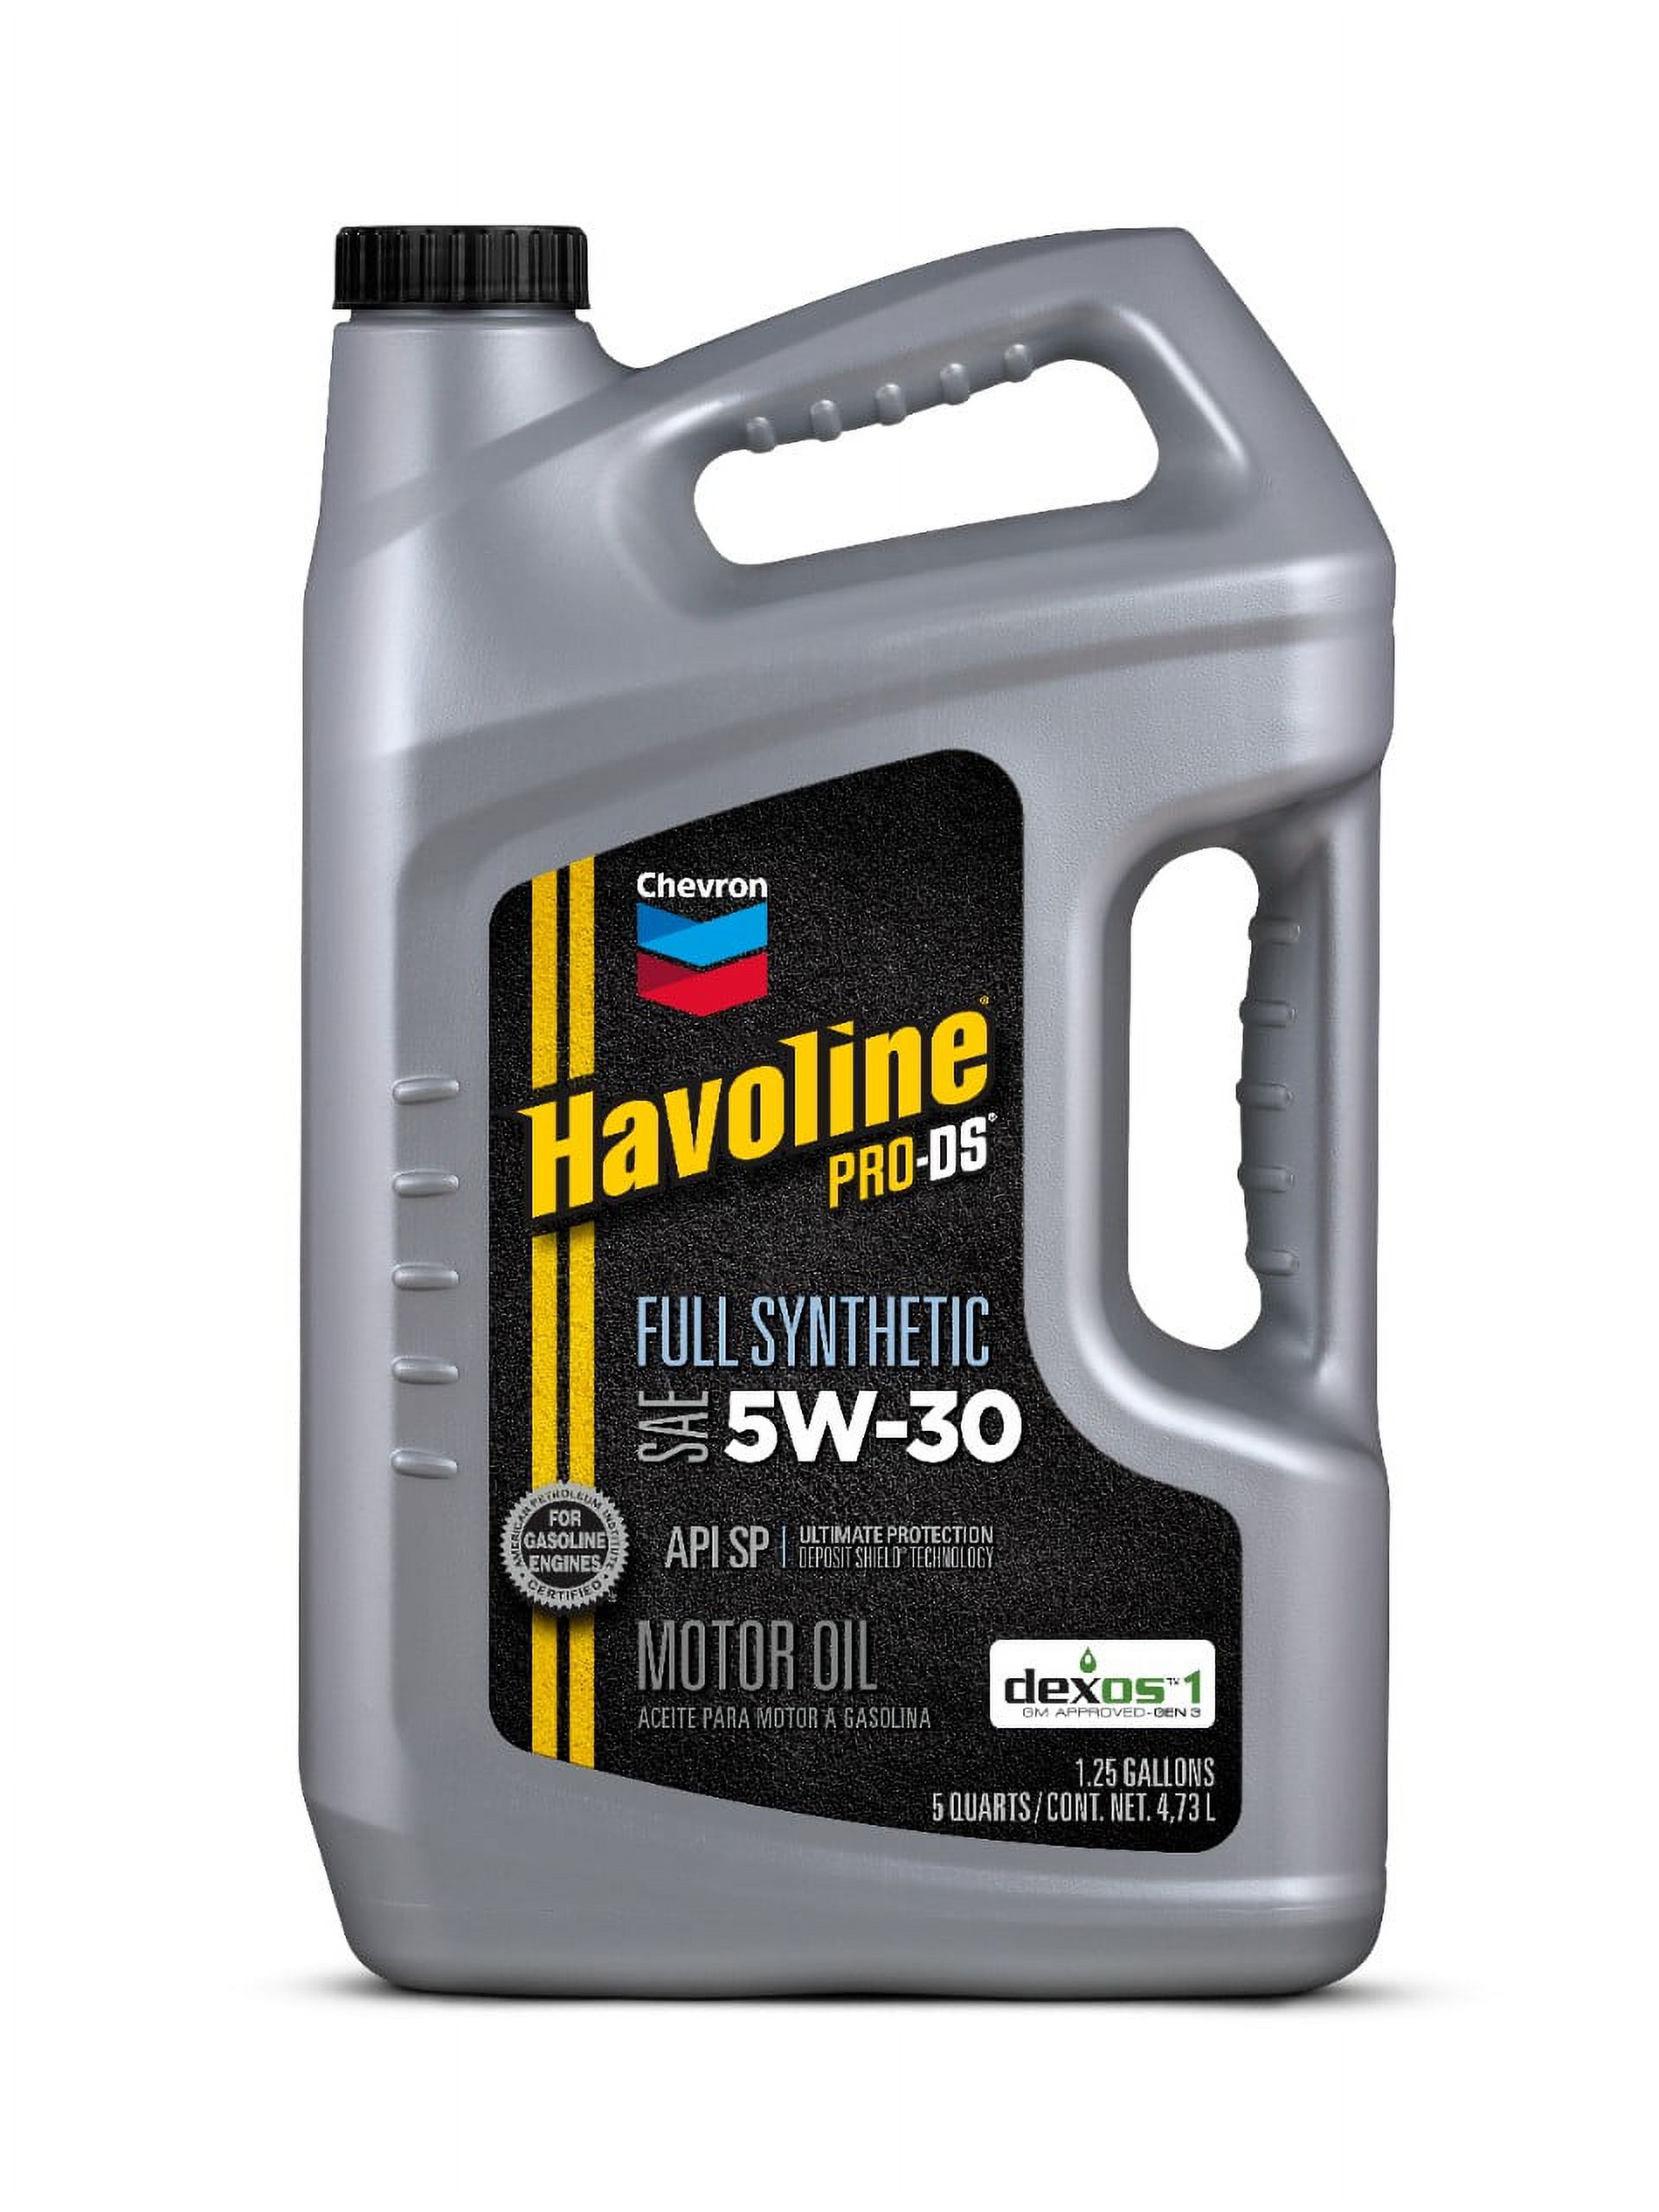 Chevron Havoline Pro-DS Synthetic Motor Oil 5W-30, 5 quart - image 1 of 7